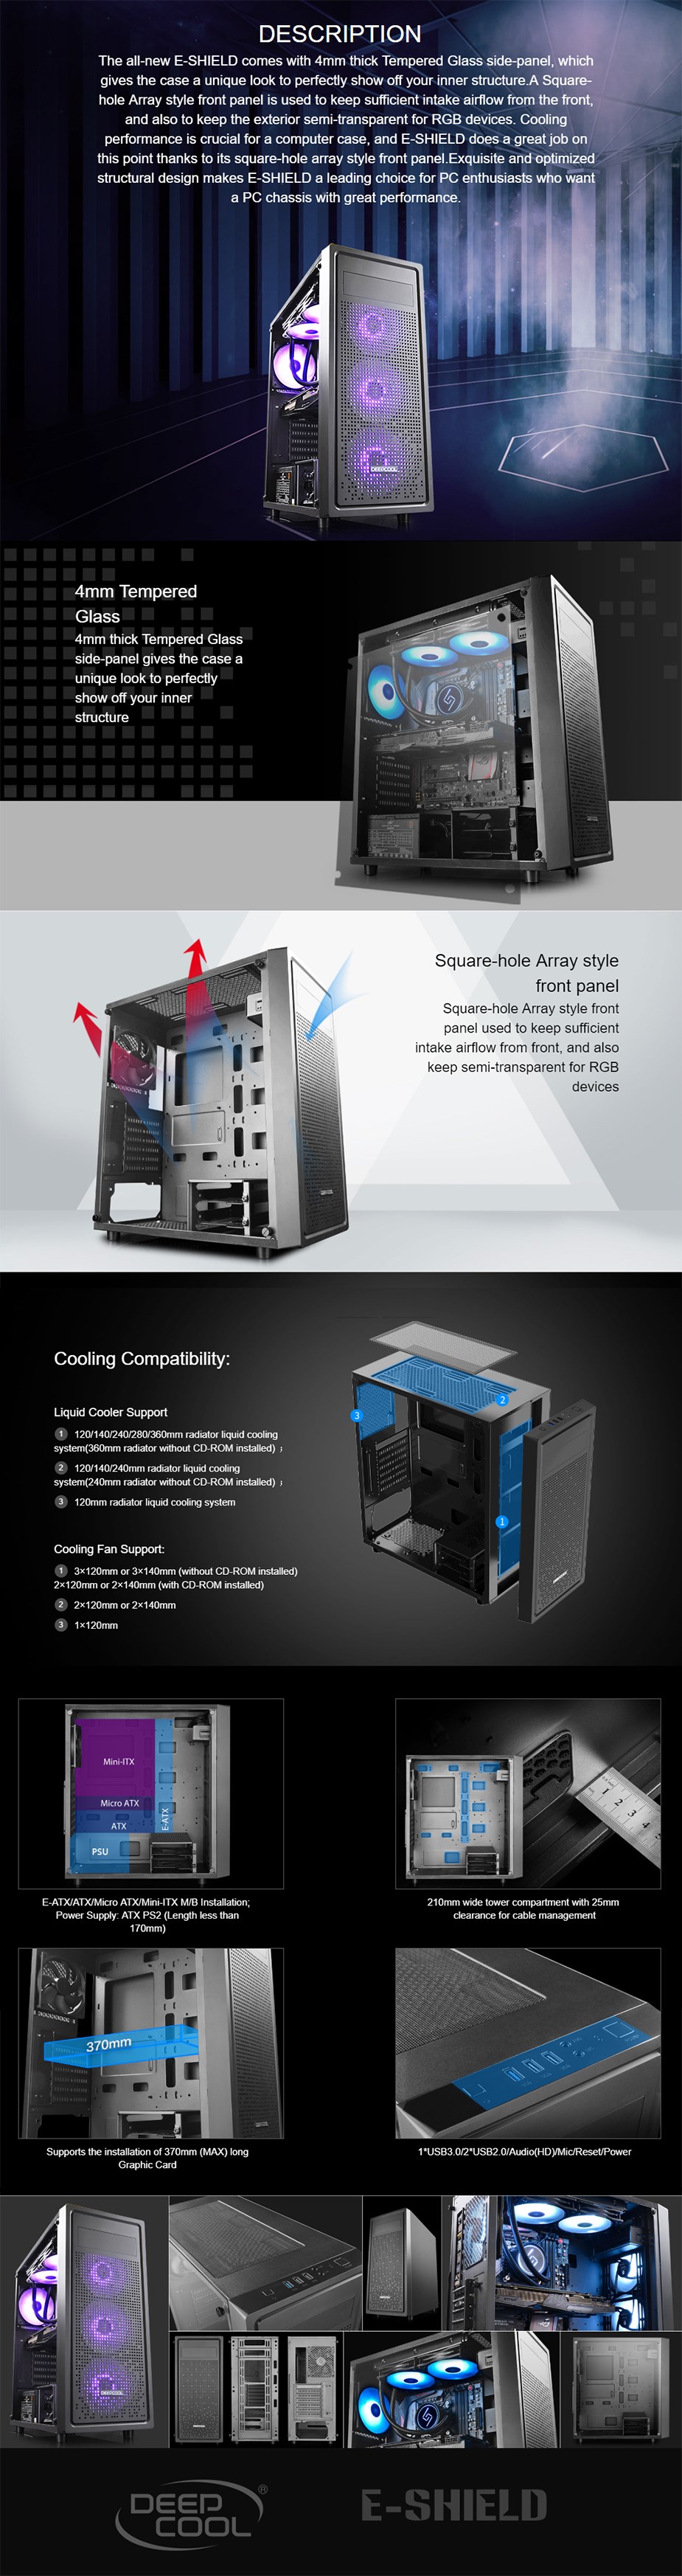 Deepcool E-SHIELD Tempered Glass Mid-Tower E-ATX Case - Desktop Overview 2